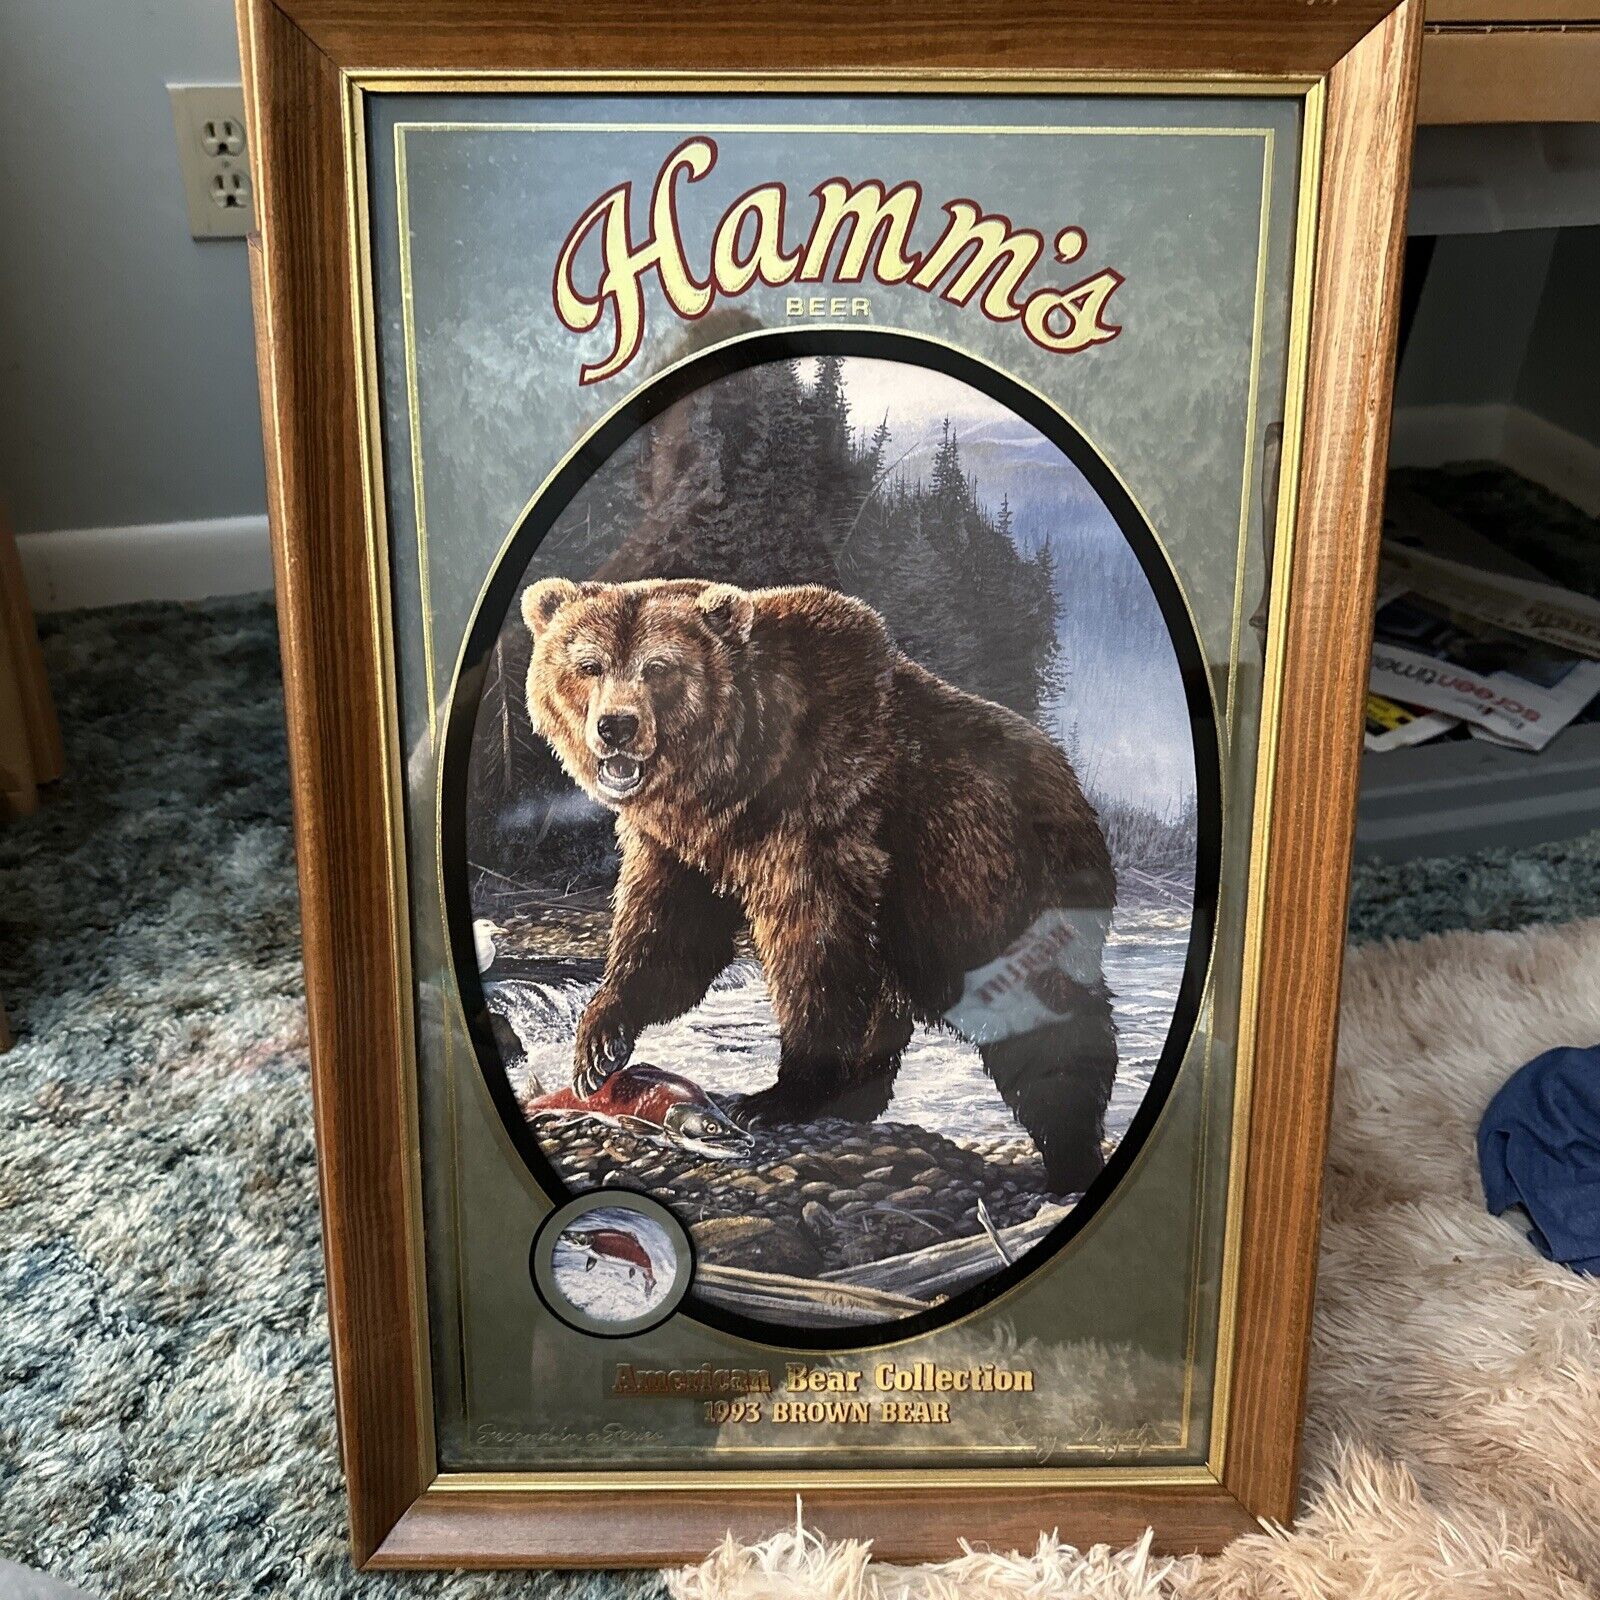 Hamms Beer American Bear Collection 1993 Brown Bear Beer Mirror Second In Series